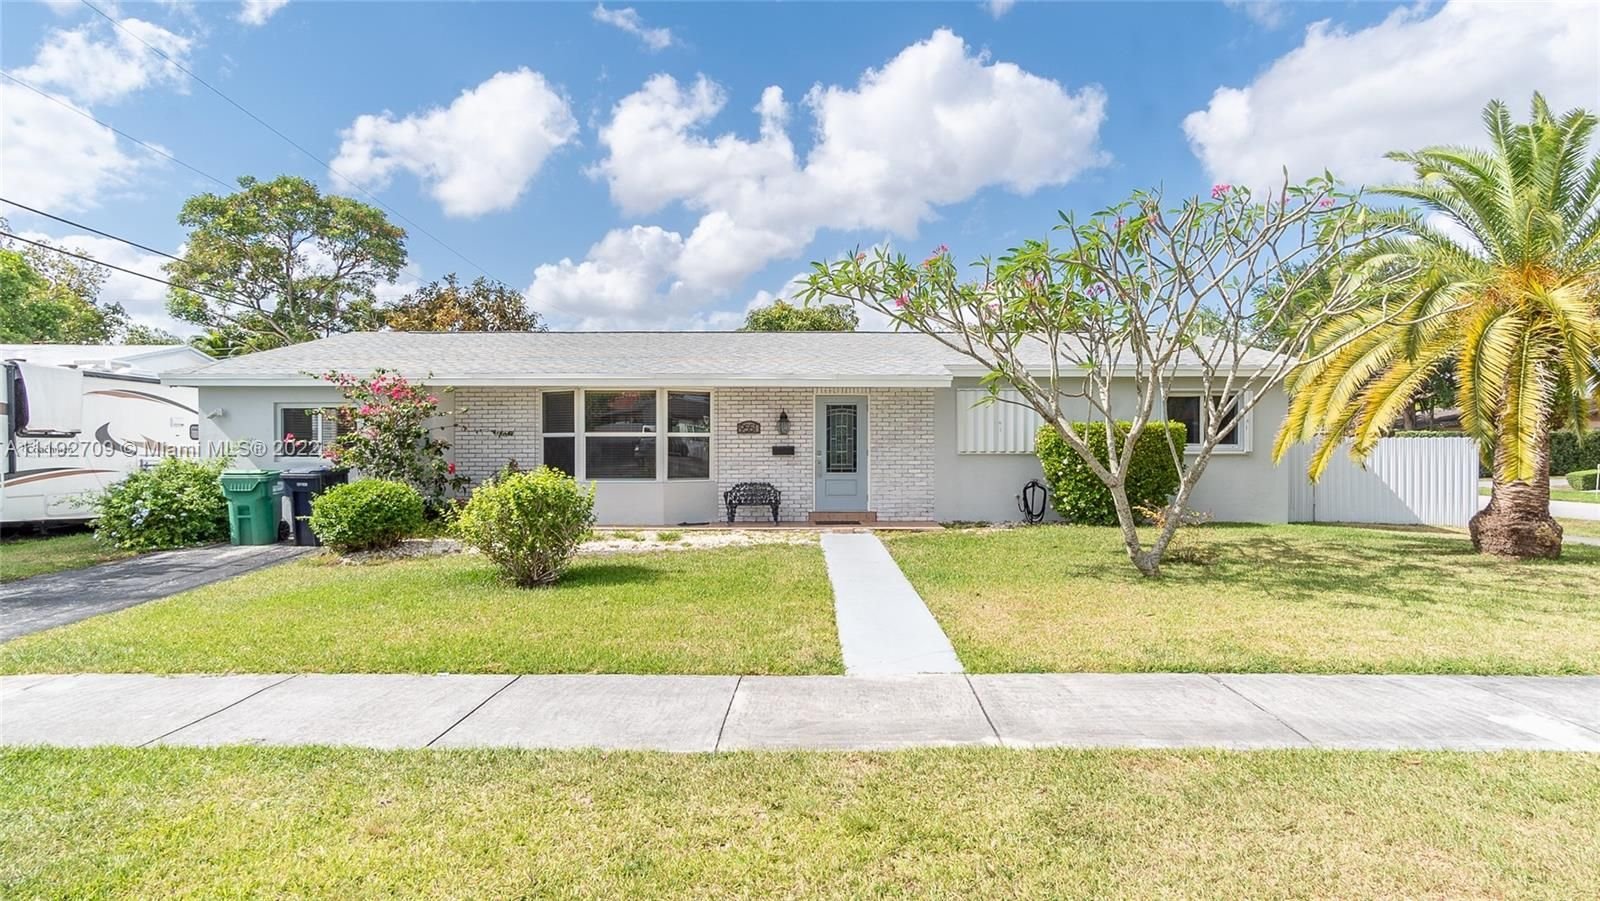 Real estate property located at 9551 58th St, Miami-Dade County, Miami, FL